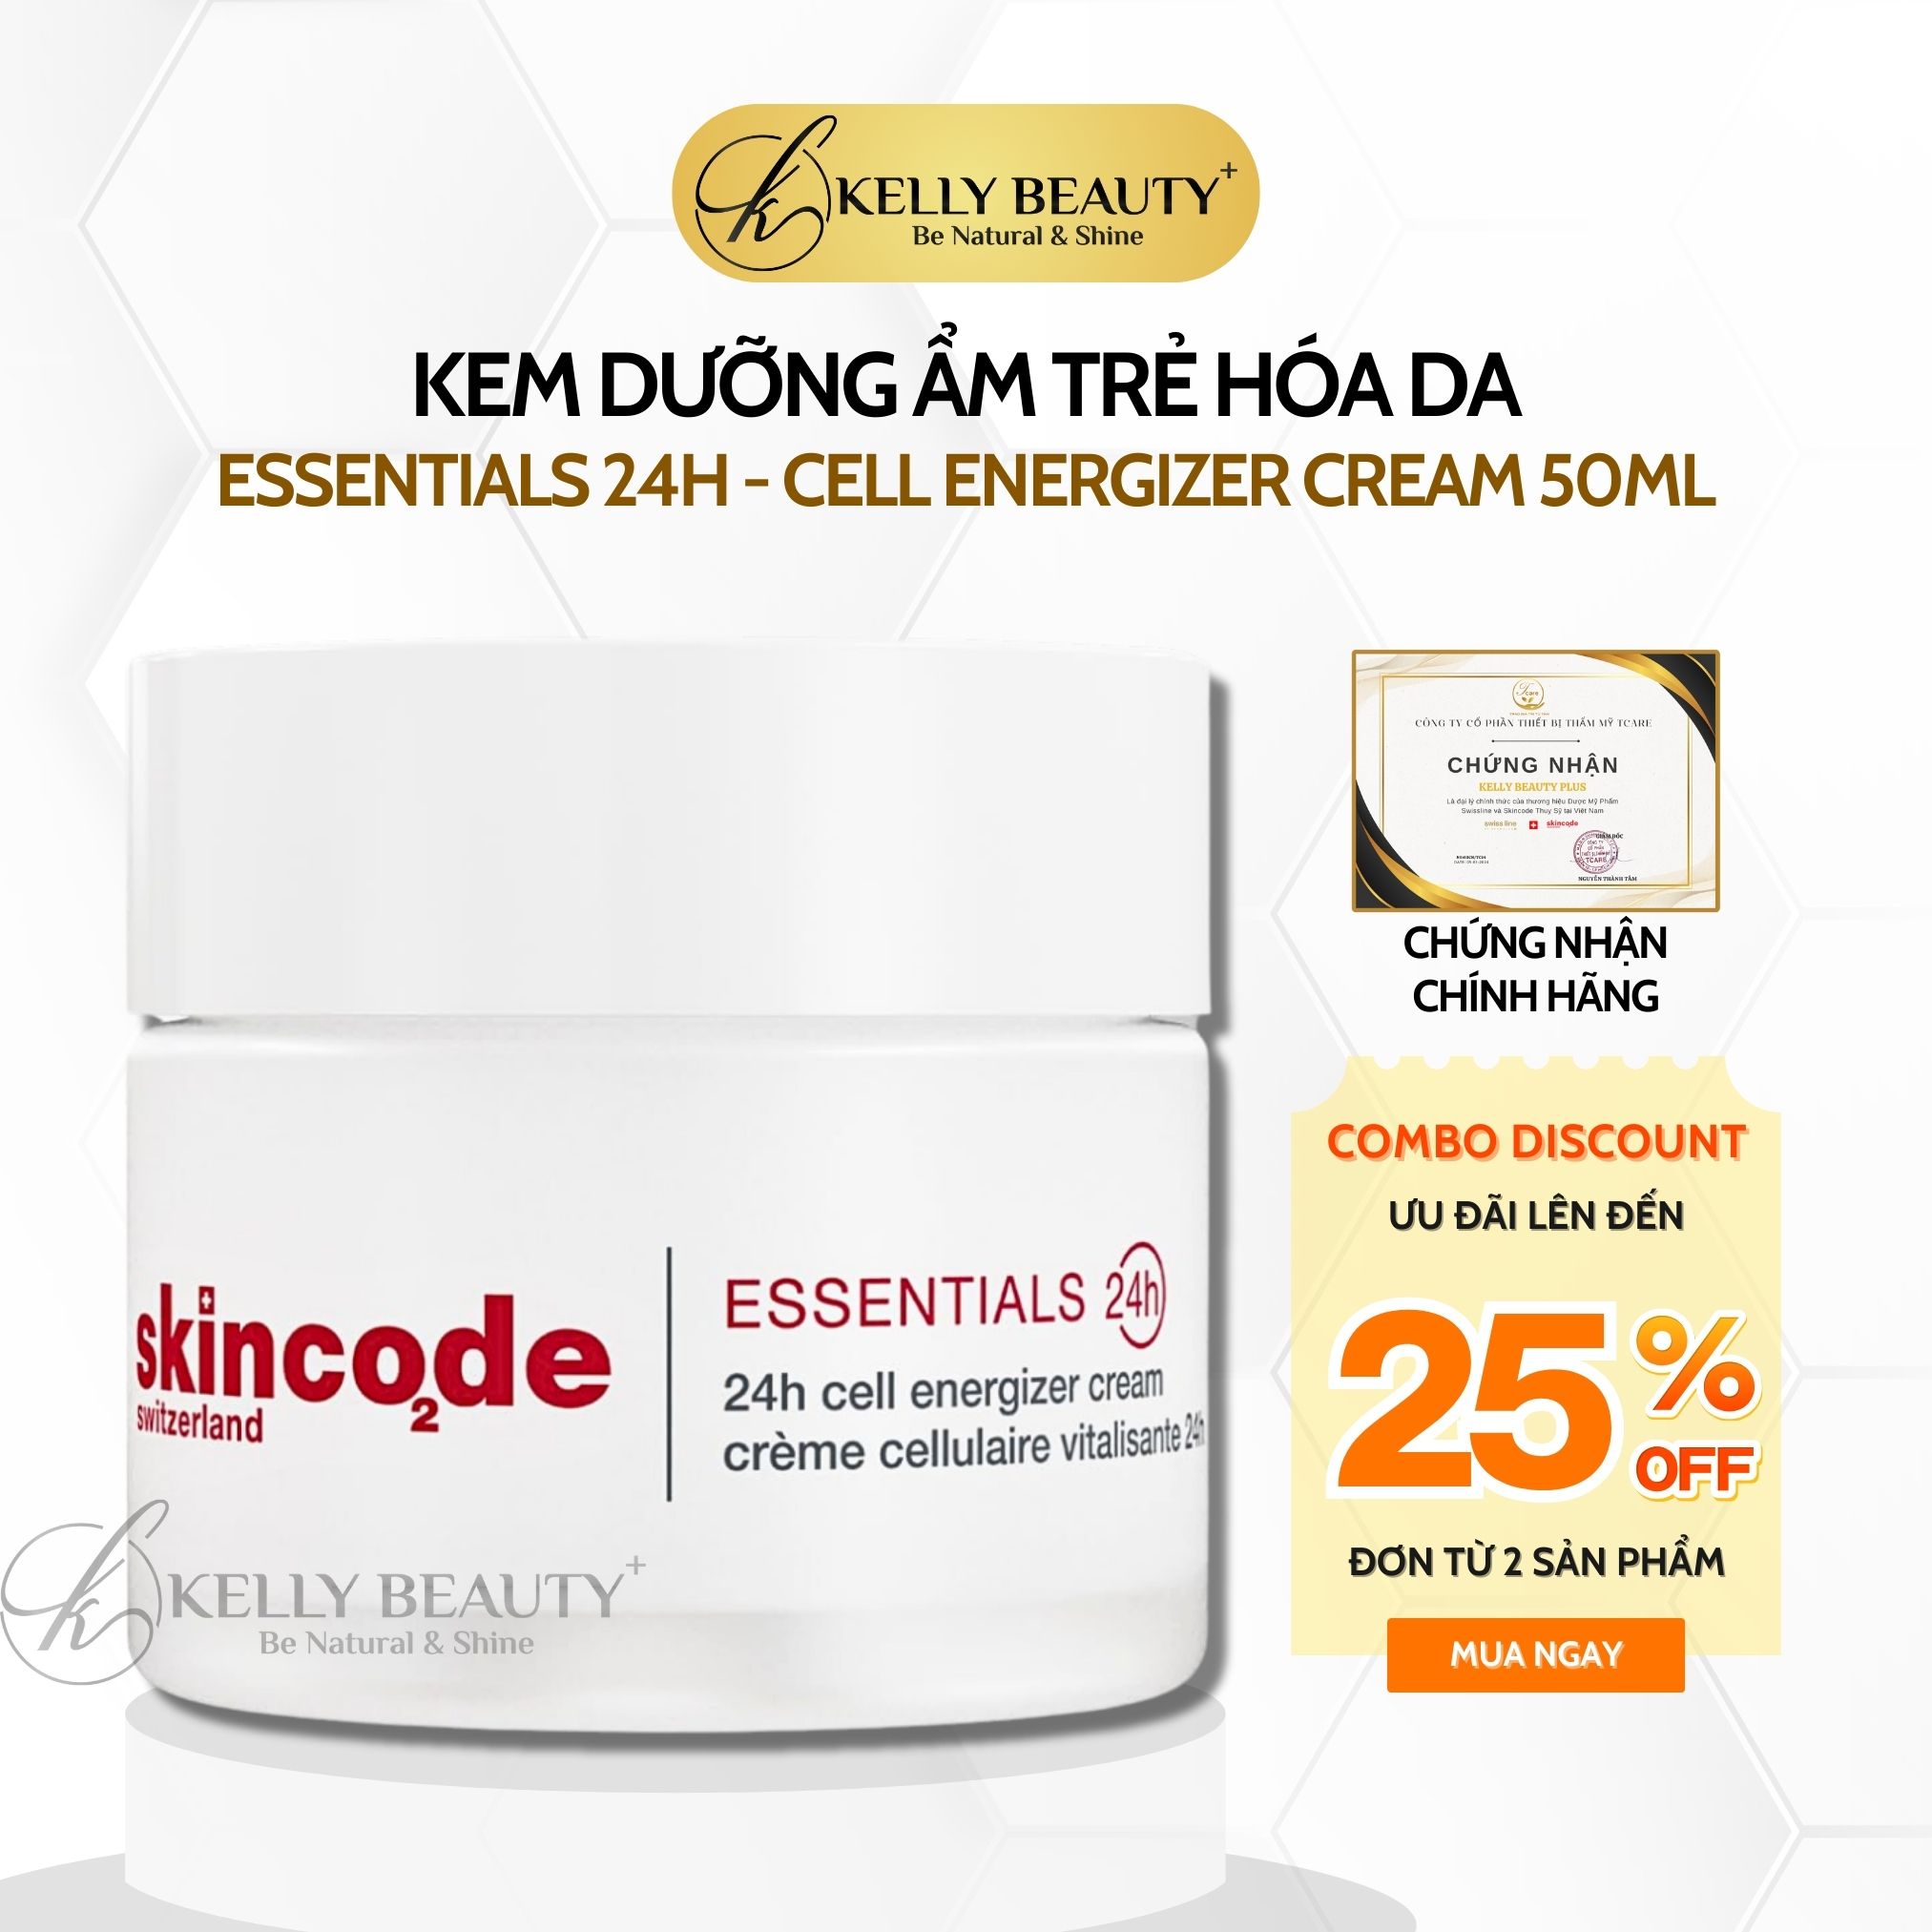 Hình ảnh Kem Dưỡng Ẩm Trẻ Hóa Da Skincode Essentials 24h Cell Energizer Cream | Kelly Beauty